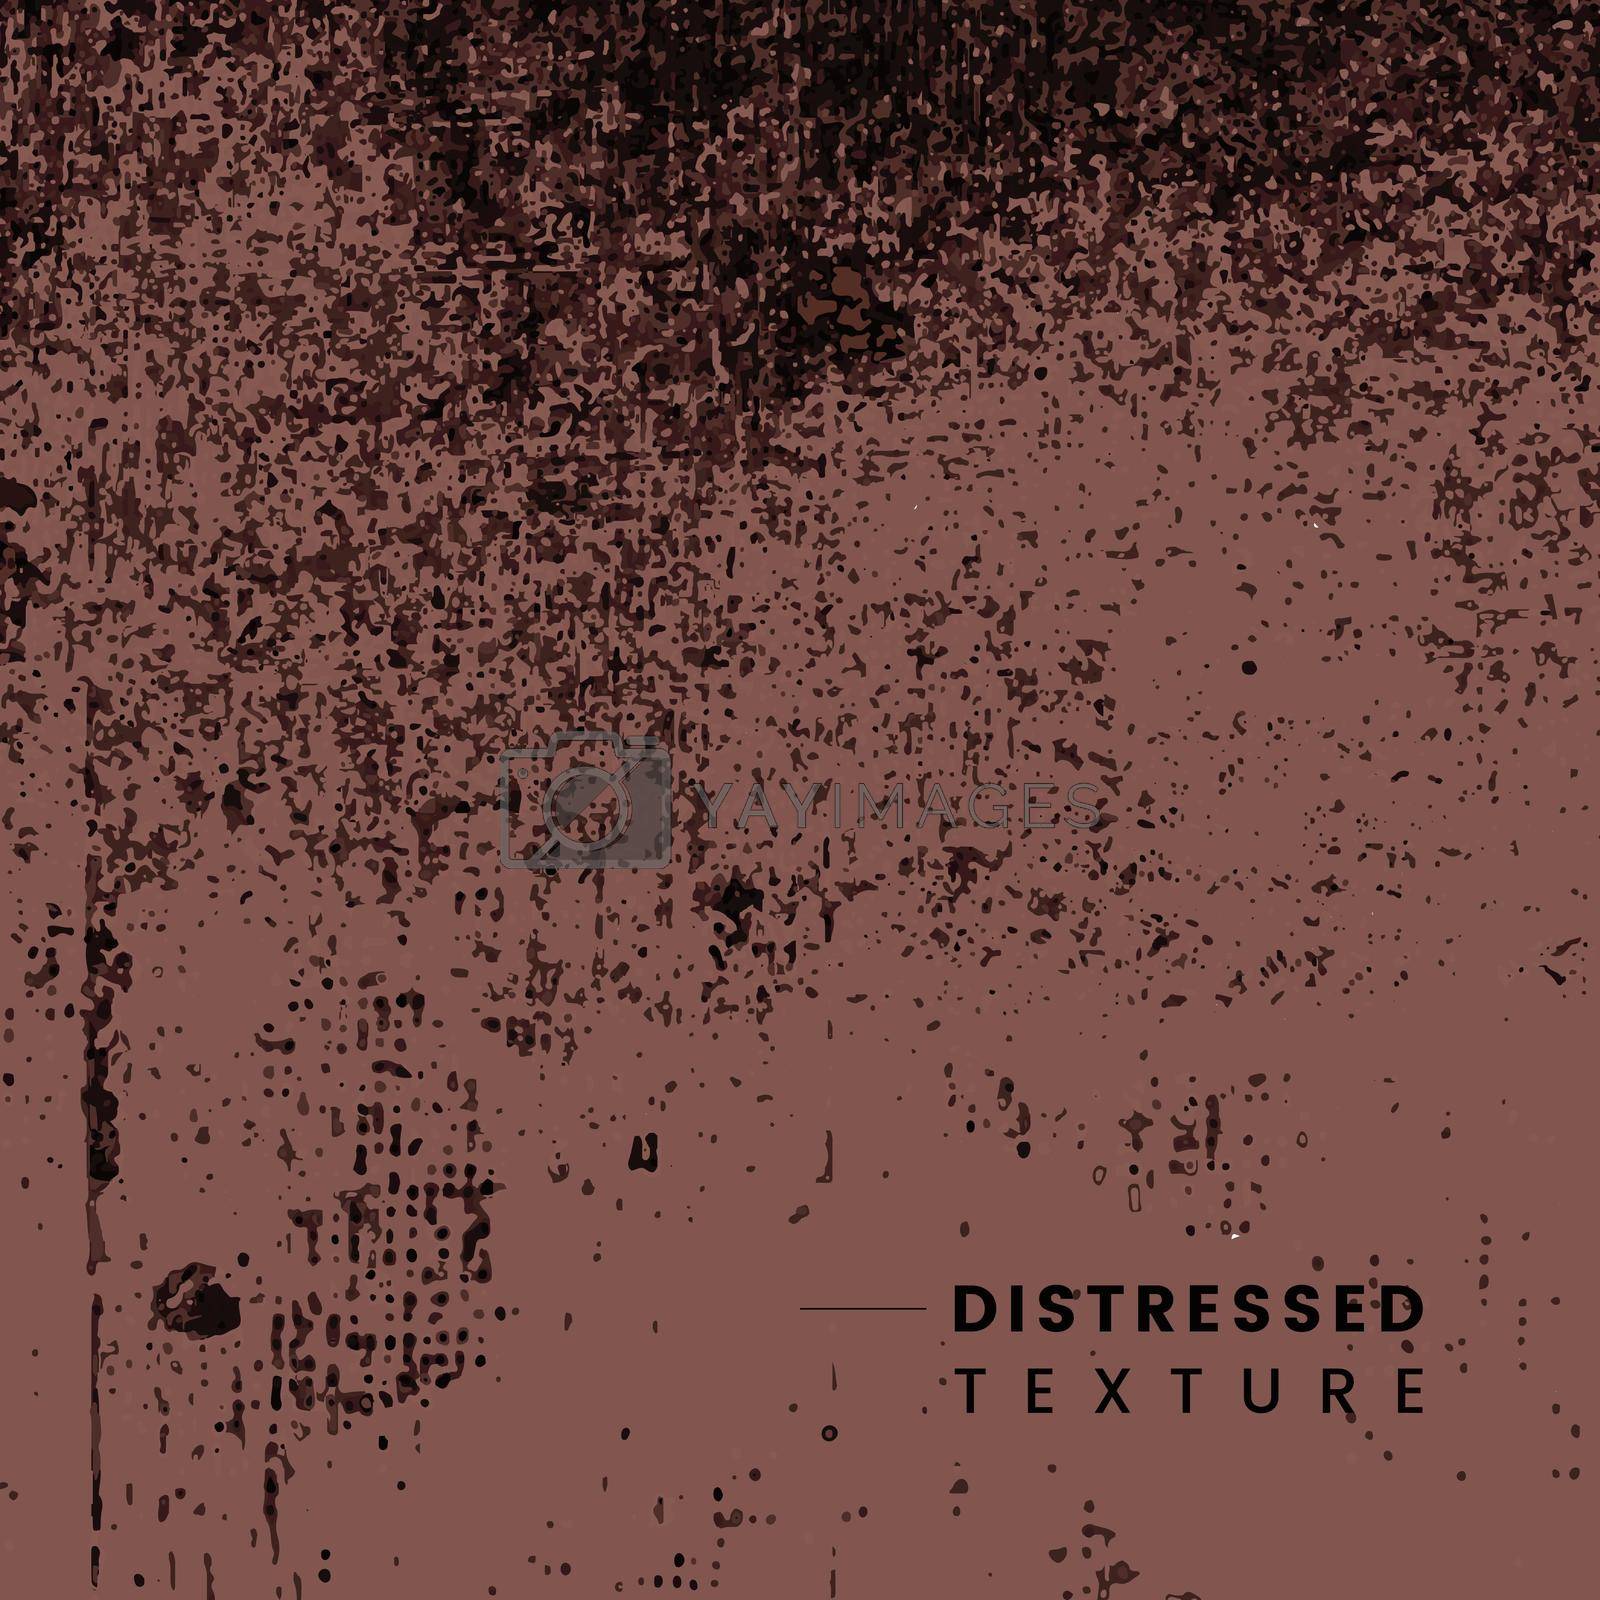 Grunge deep red distressed textured background